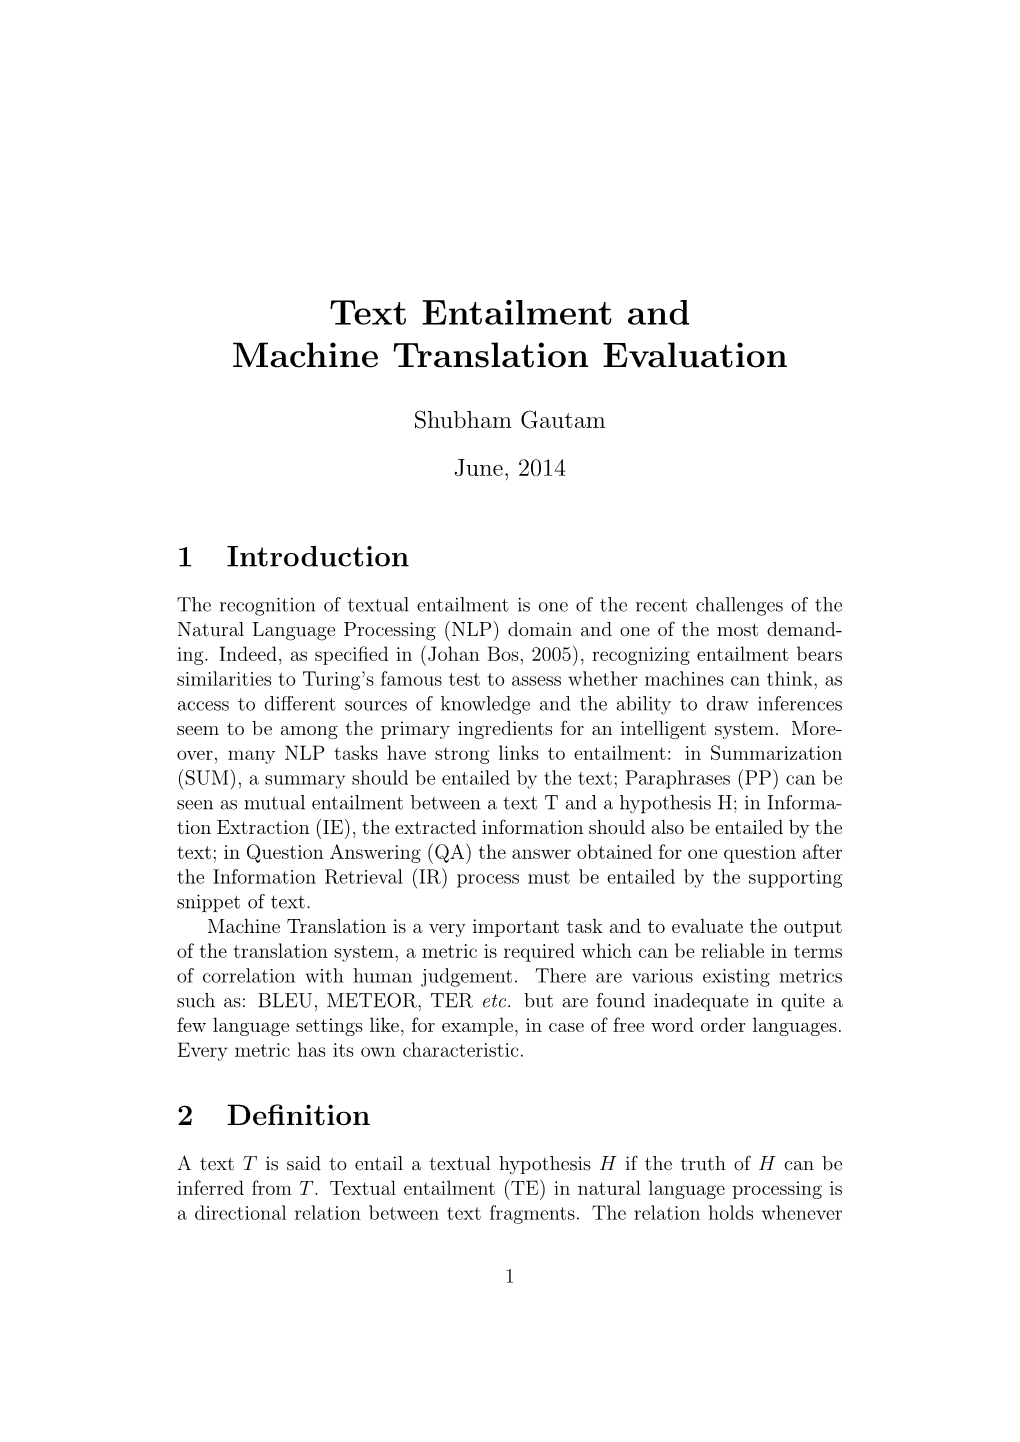 Text Entailment and Machine Translation Evaluation: Shubham Gautam, June 2014